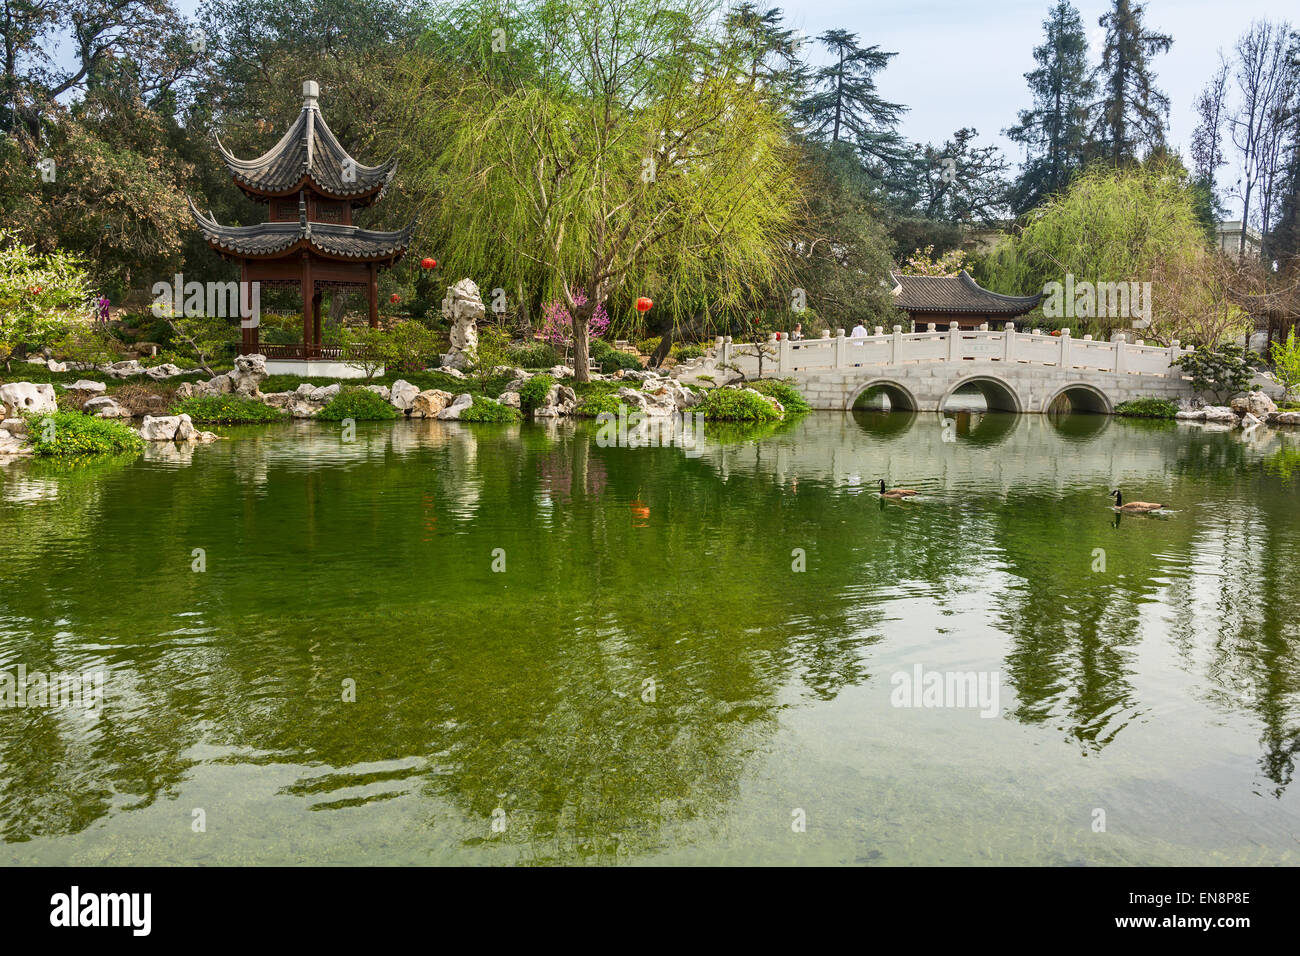 Chinese Garden at the Huntington. Stock Photo